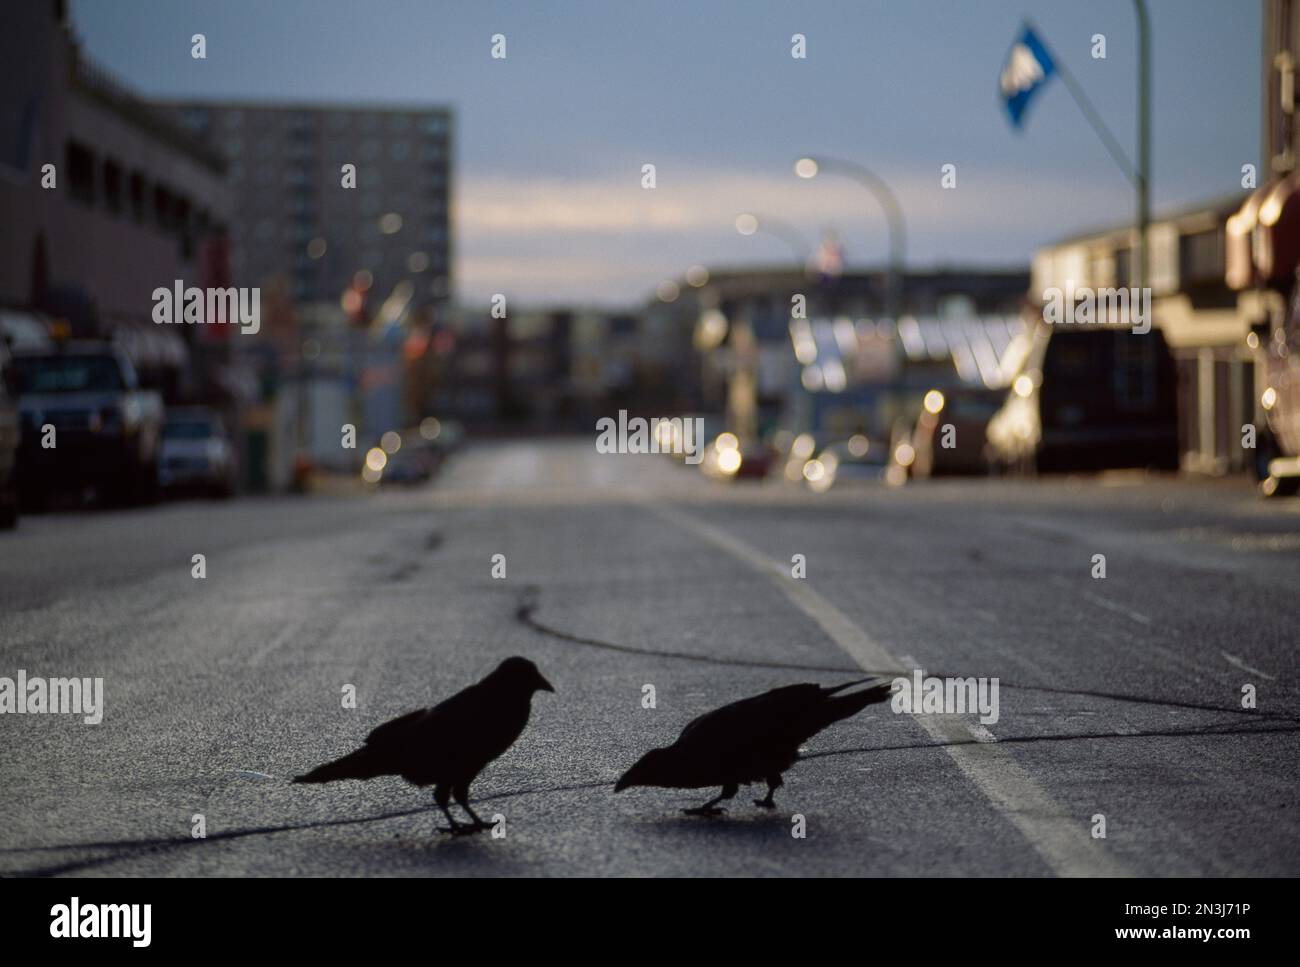 Ravens on a city street establishing pecking order; Yellowknife, Northwest Territories, Canada Stock Photo